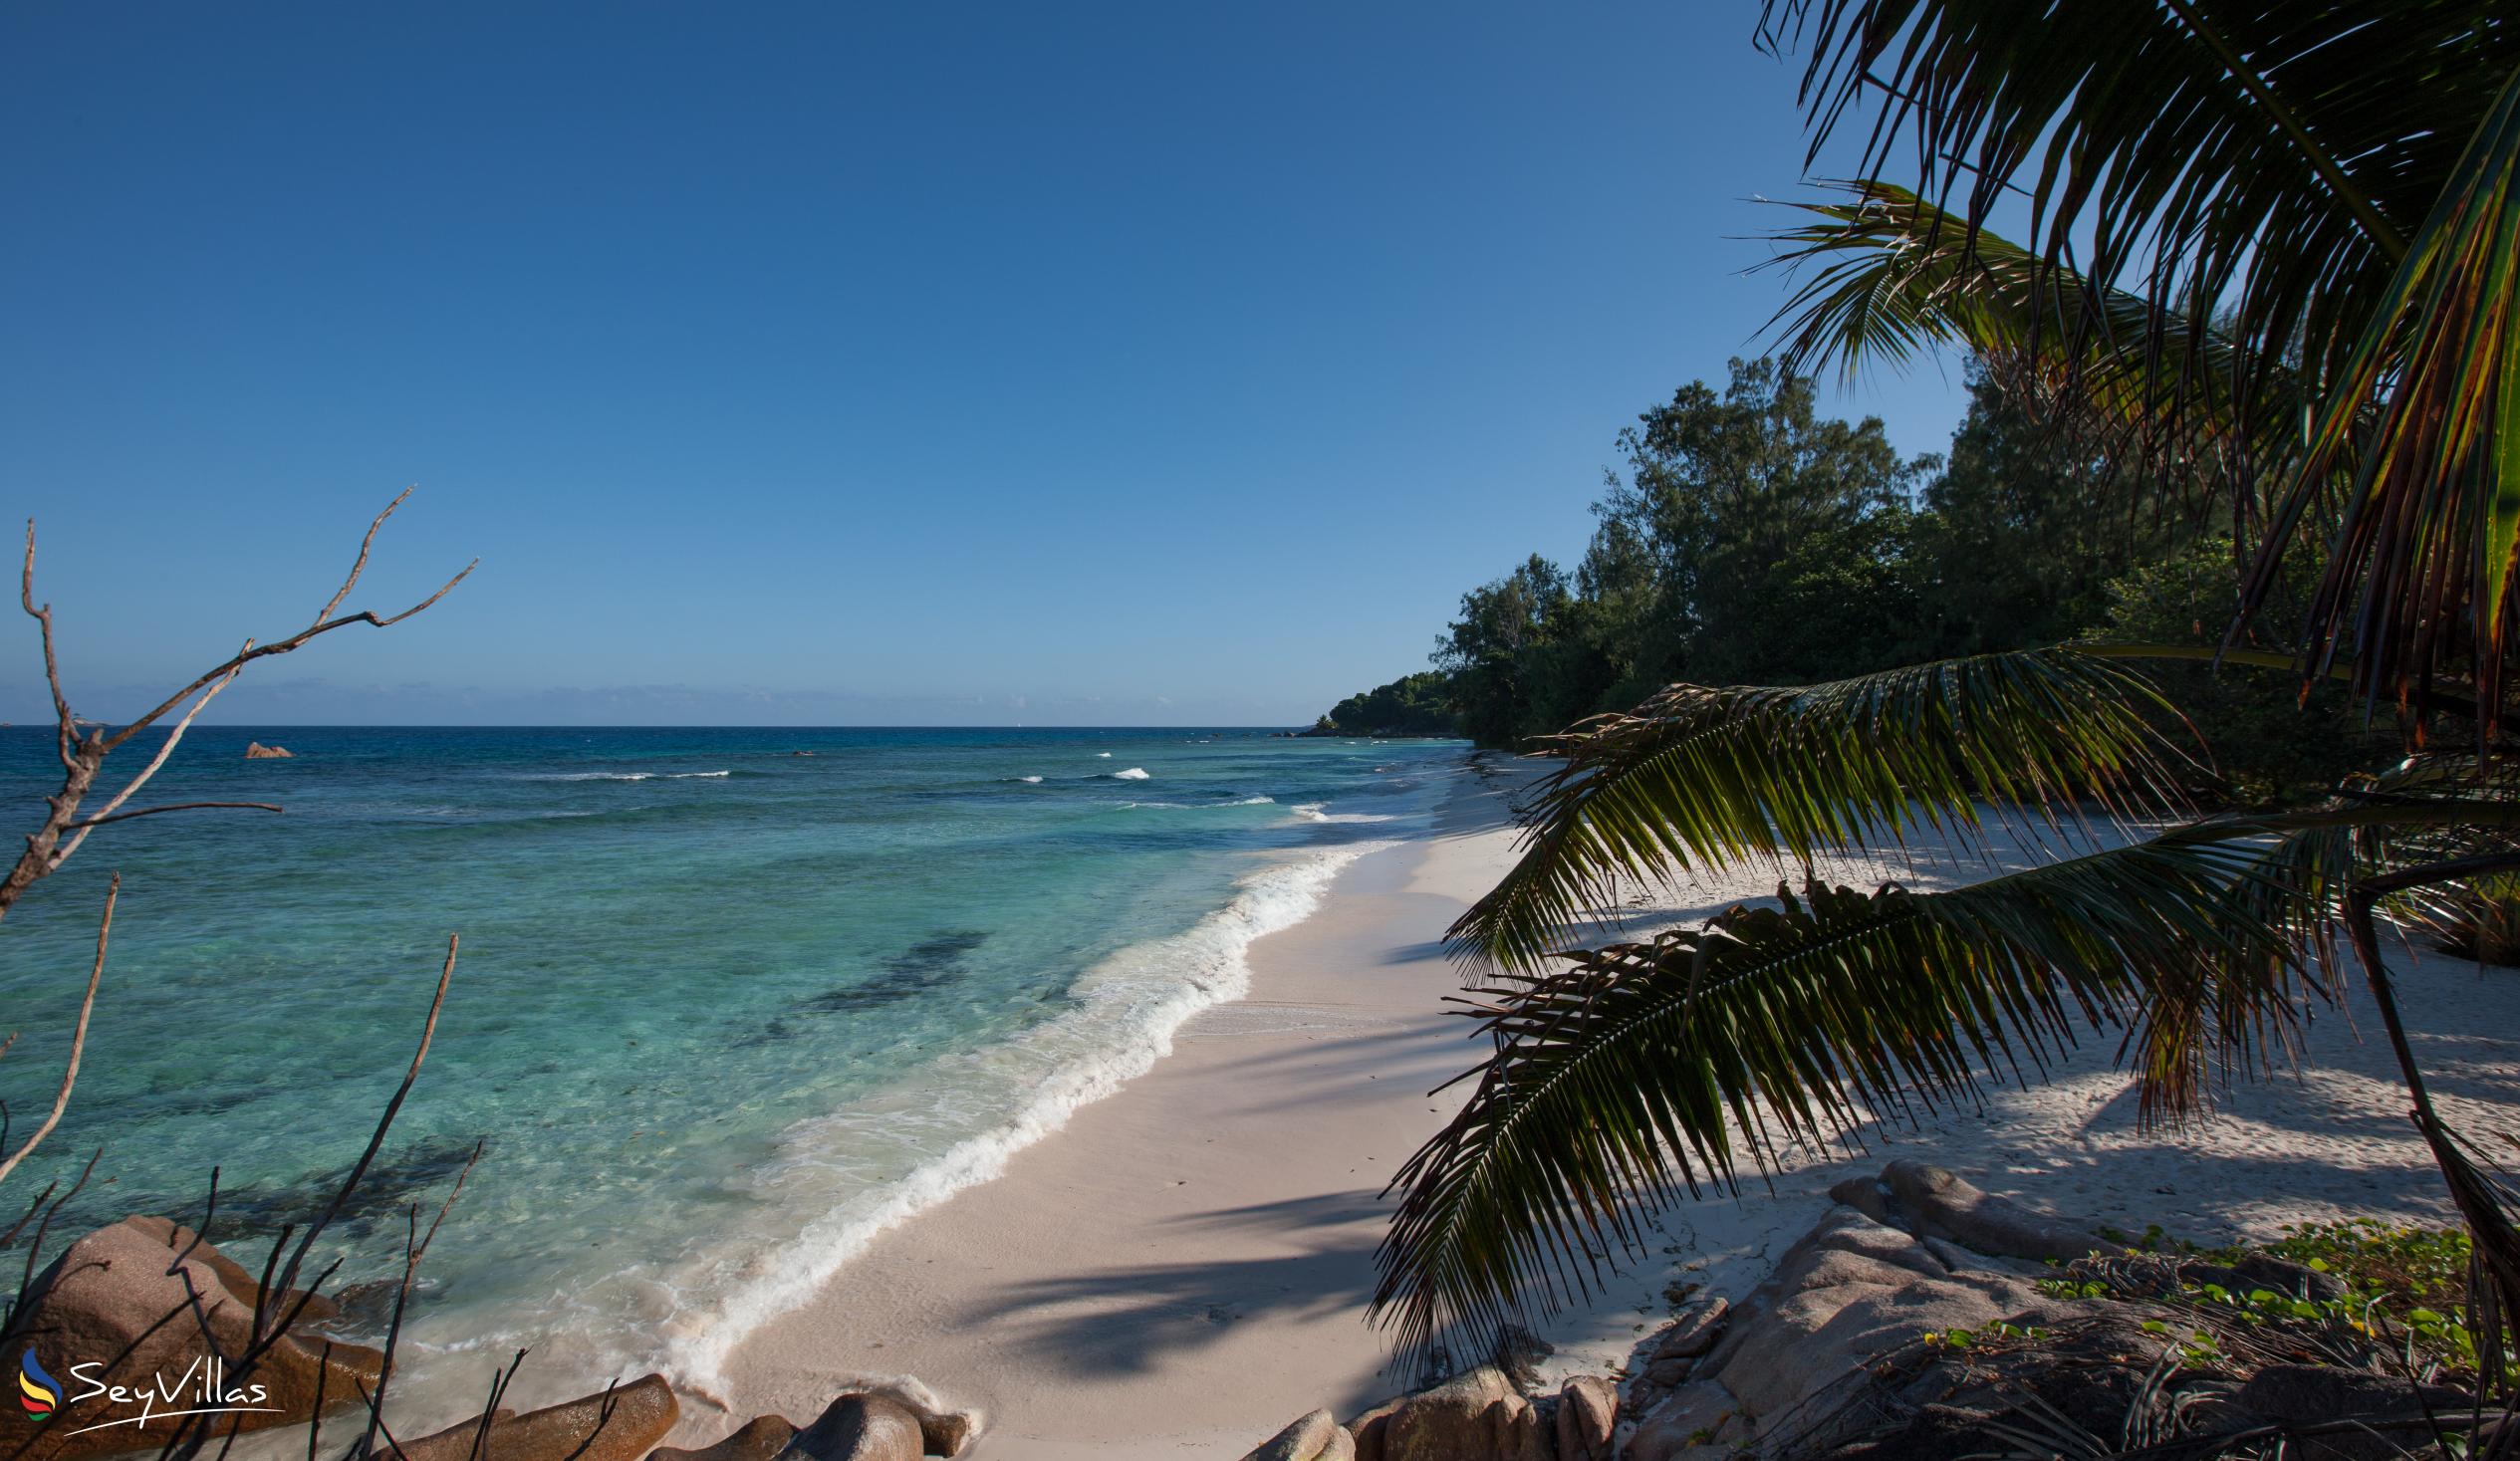 Foto 43: O'Soleil Chalets - Spiagge - La Digue (Seychelles)